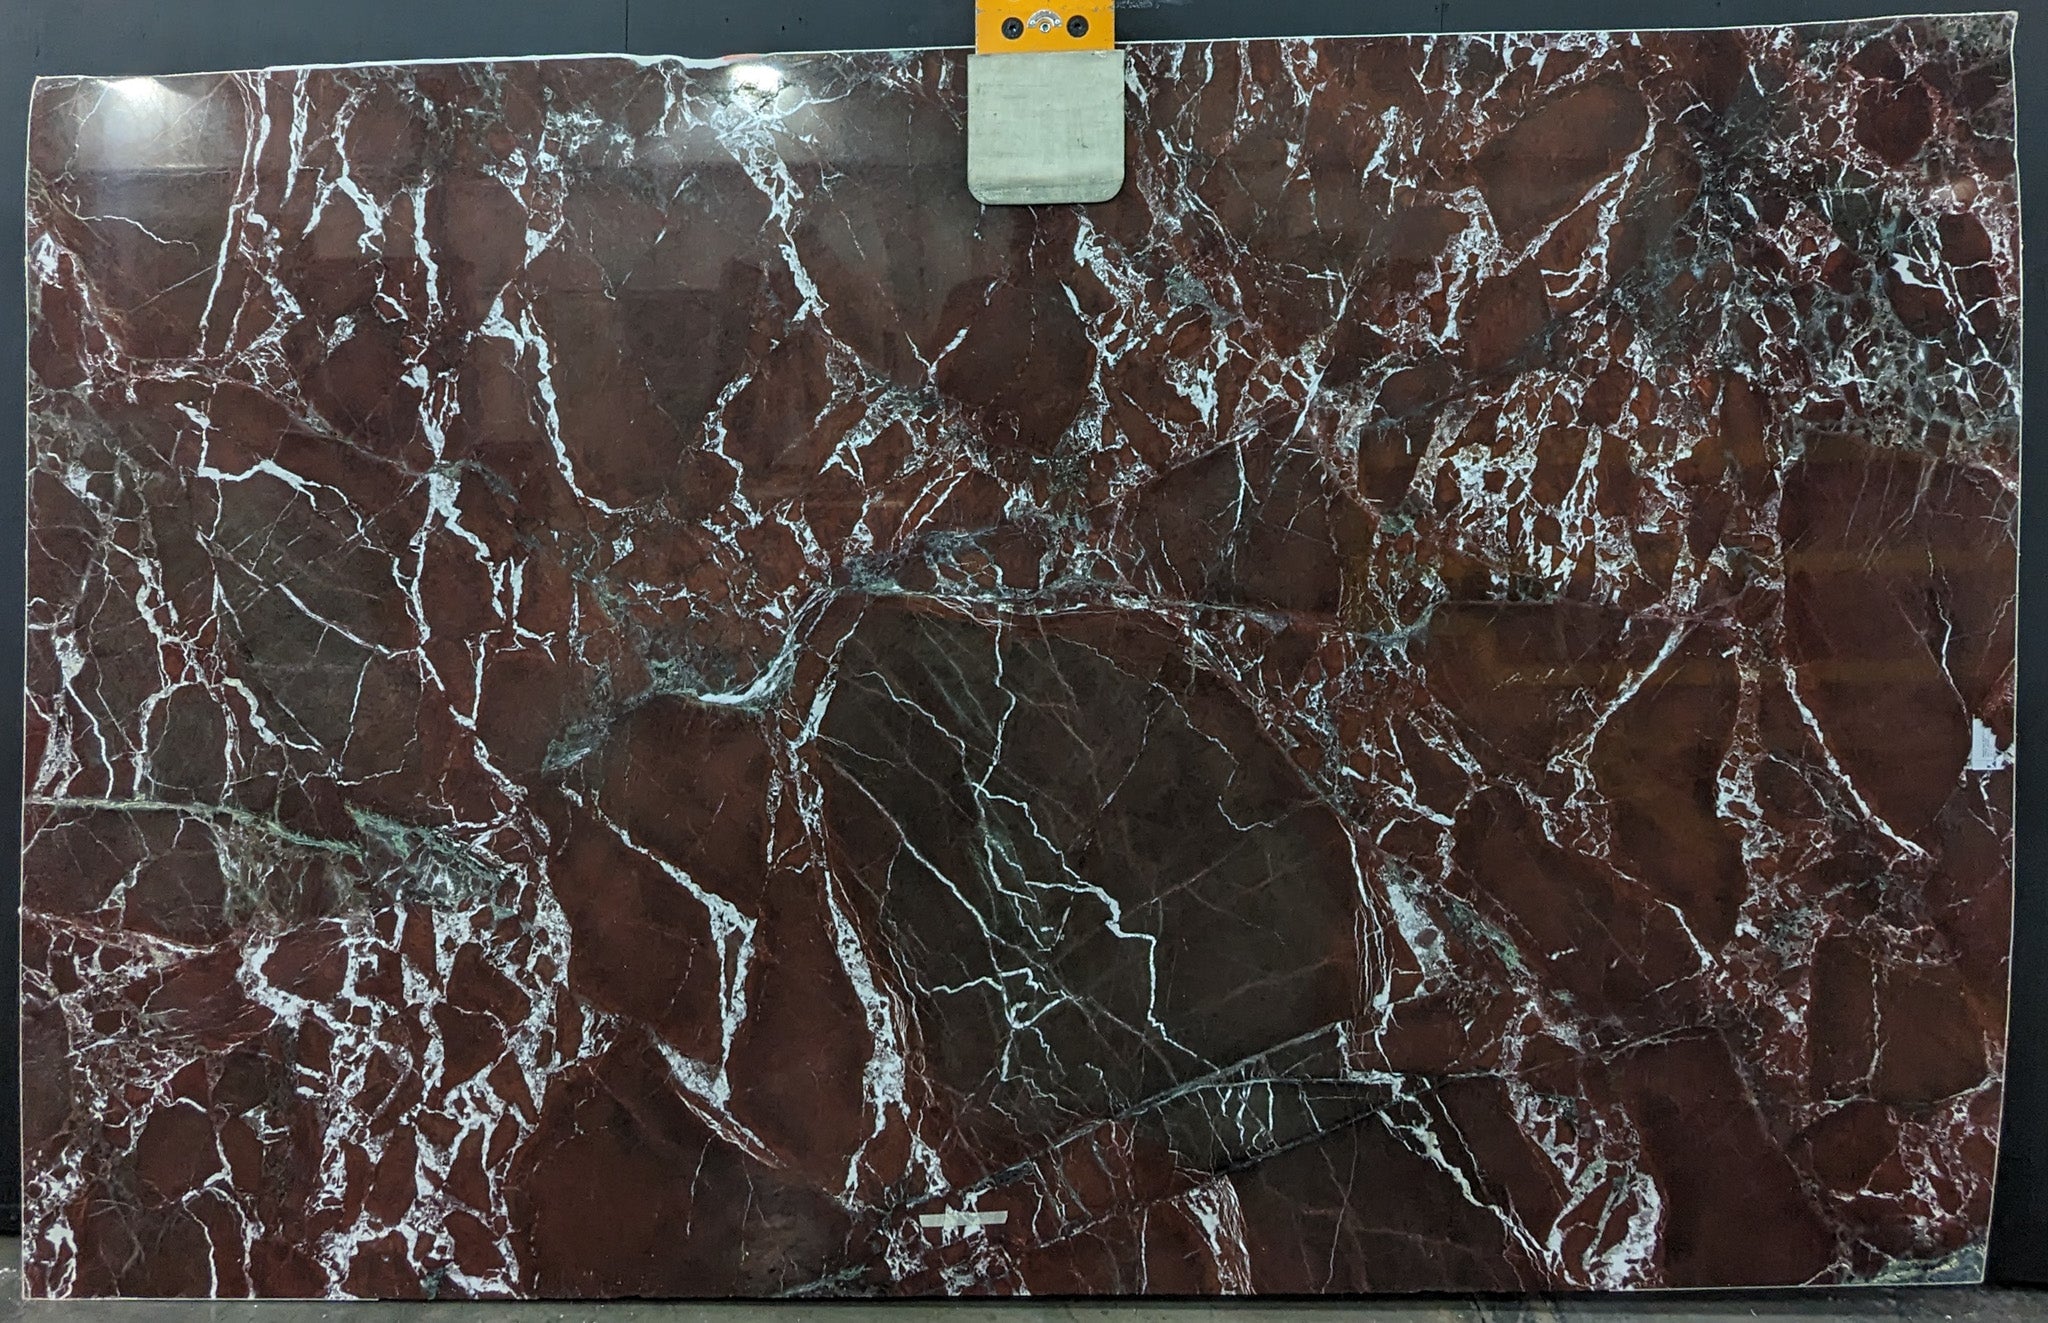  Breccia Vino Marble Slab 3/4  Polished Stone - KM23489#14 -  69x107 